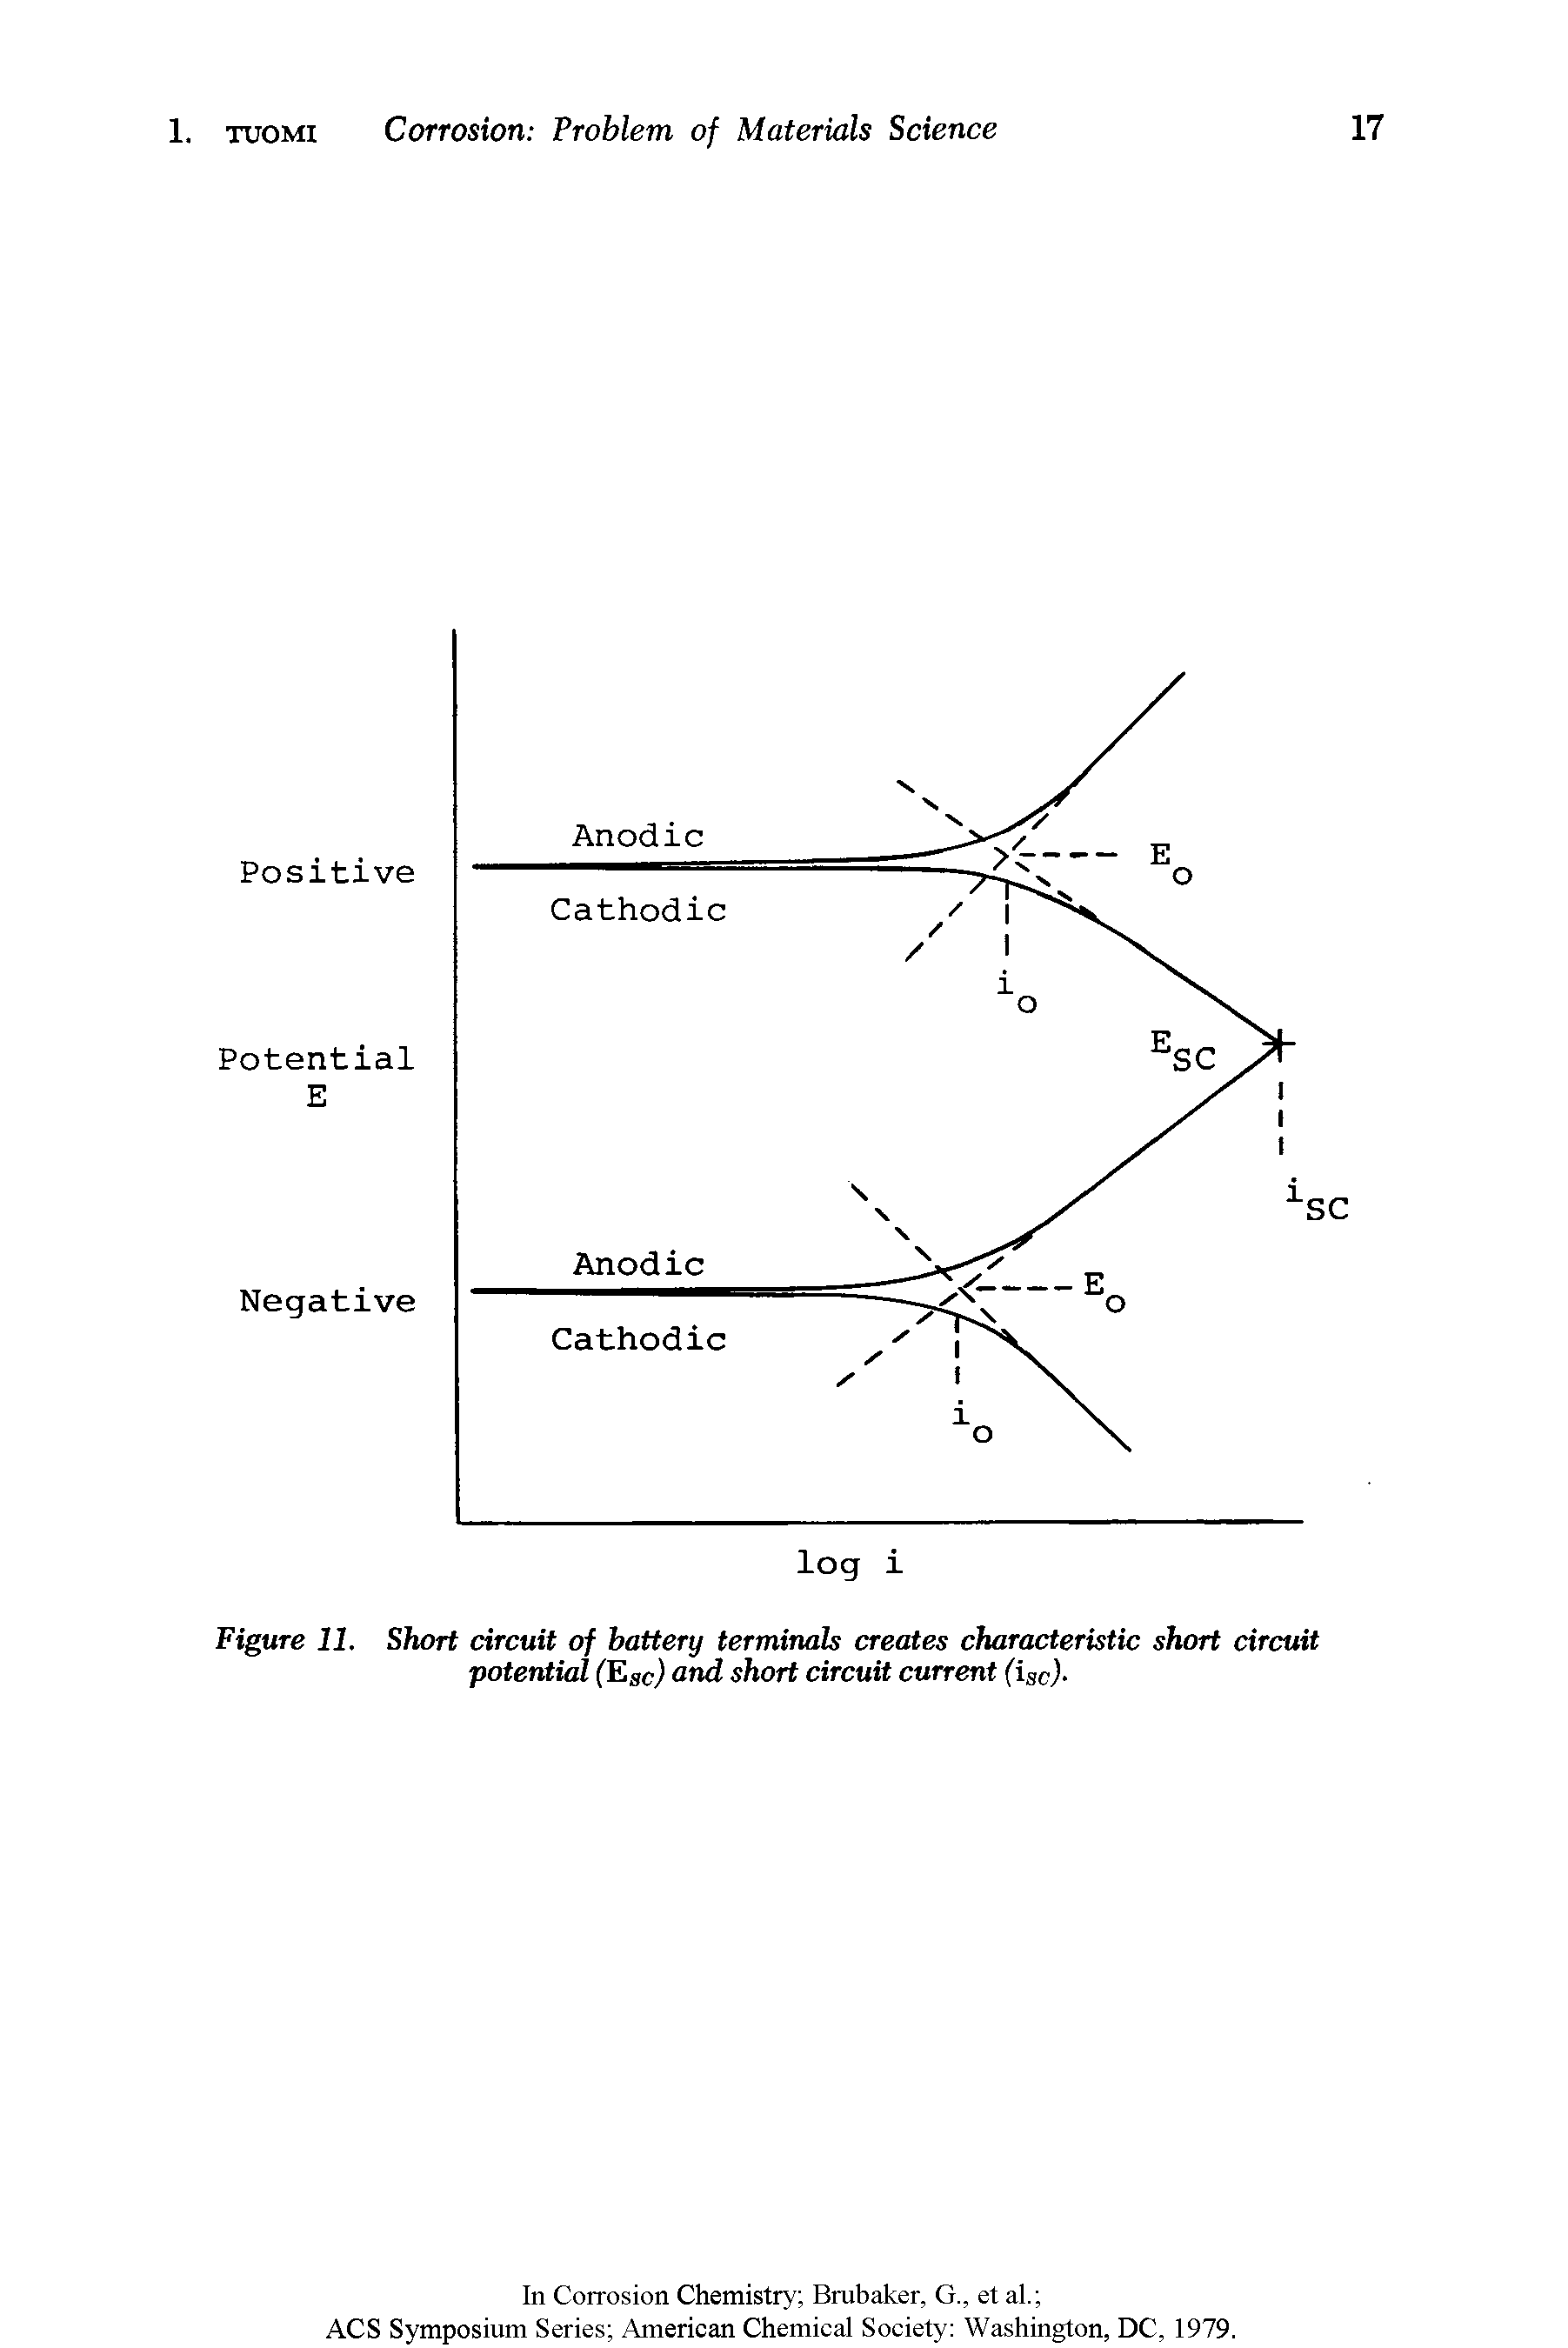 Figure 11. Short circuit of battery terminals creates characteristic short circuit potential (Eac) and short circuit current (iac).